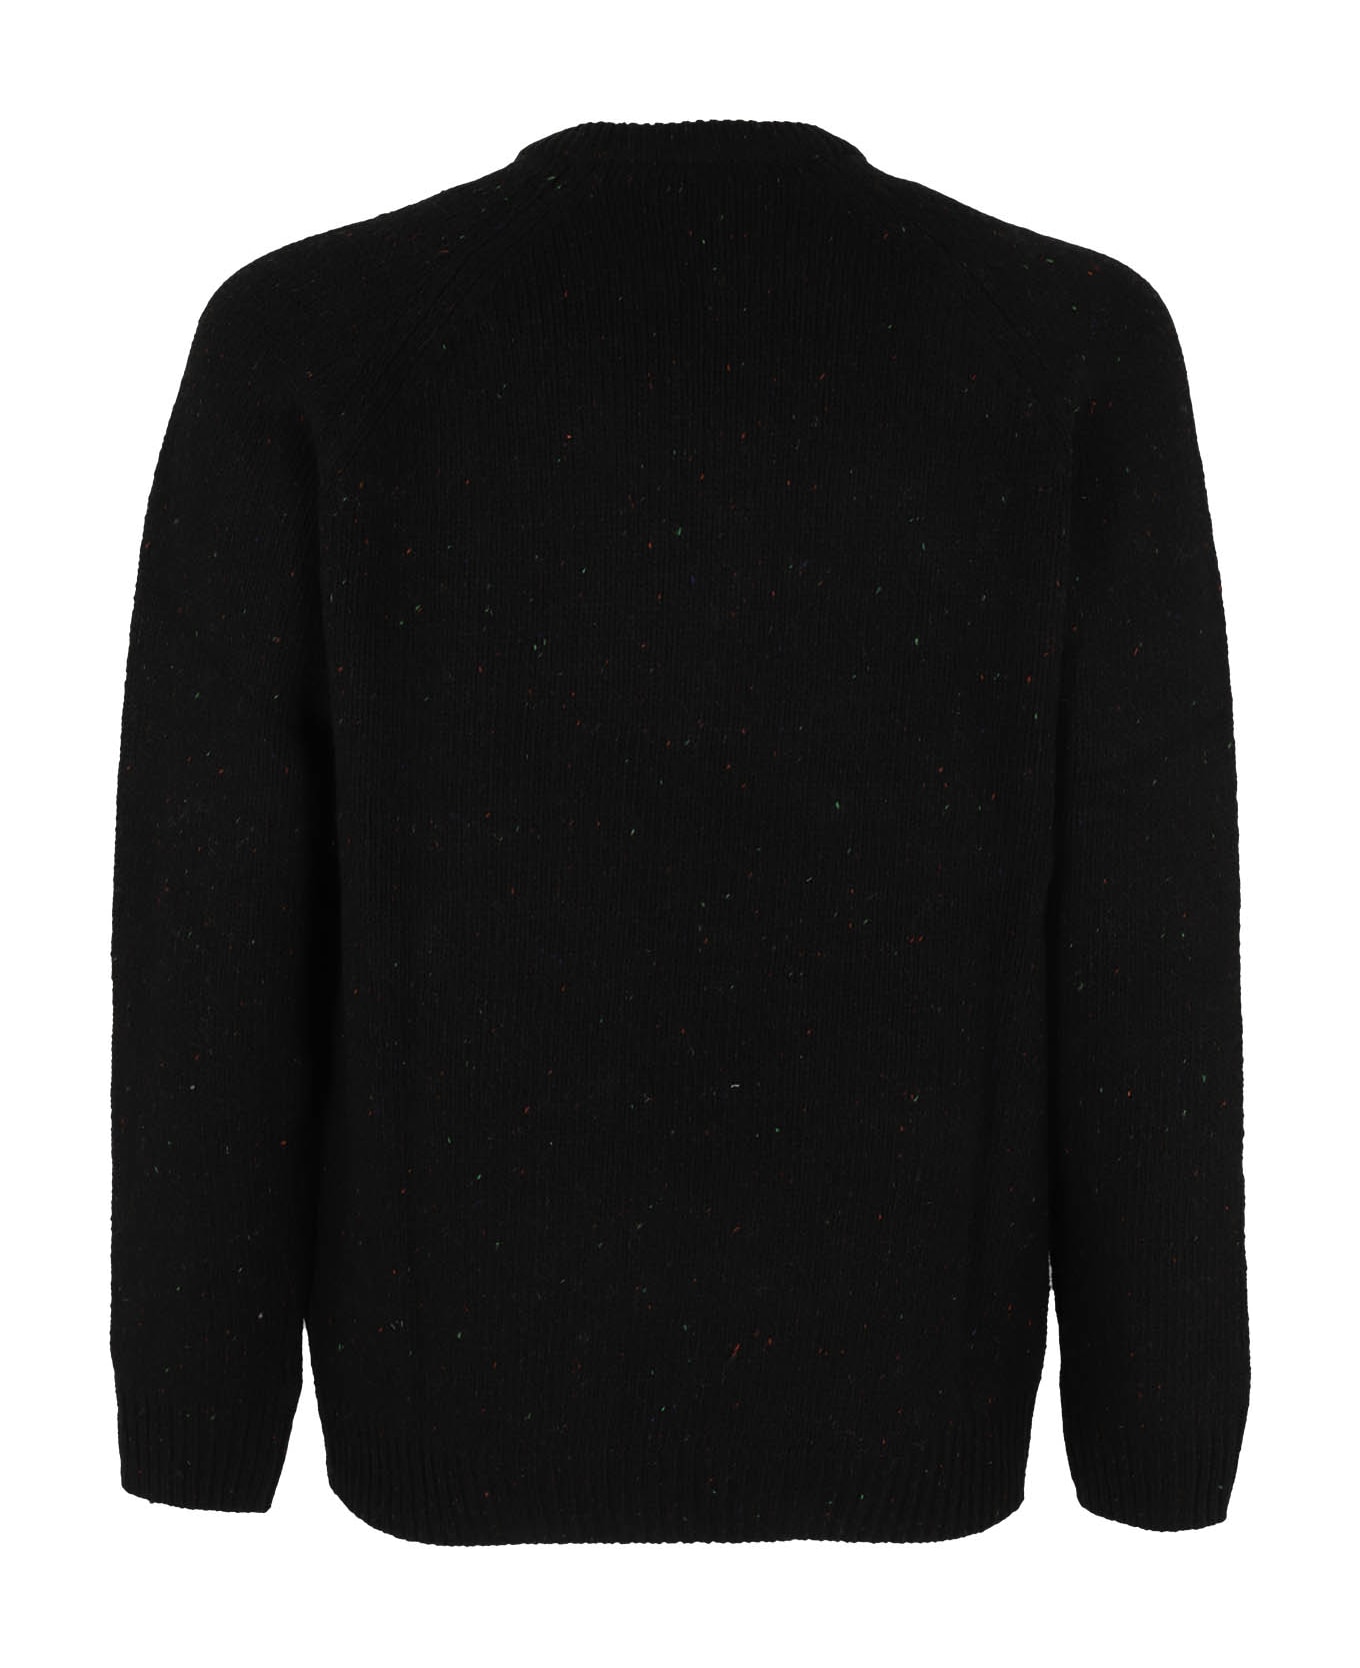 Carhartt Anglistic Sweater - Black ニットウェア